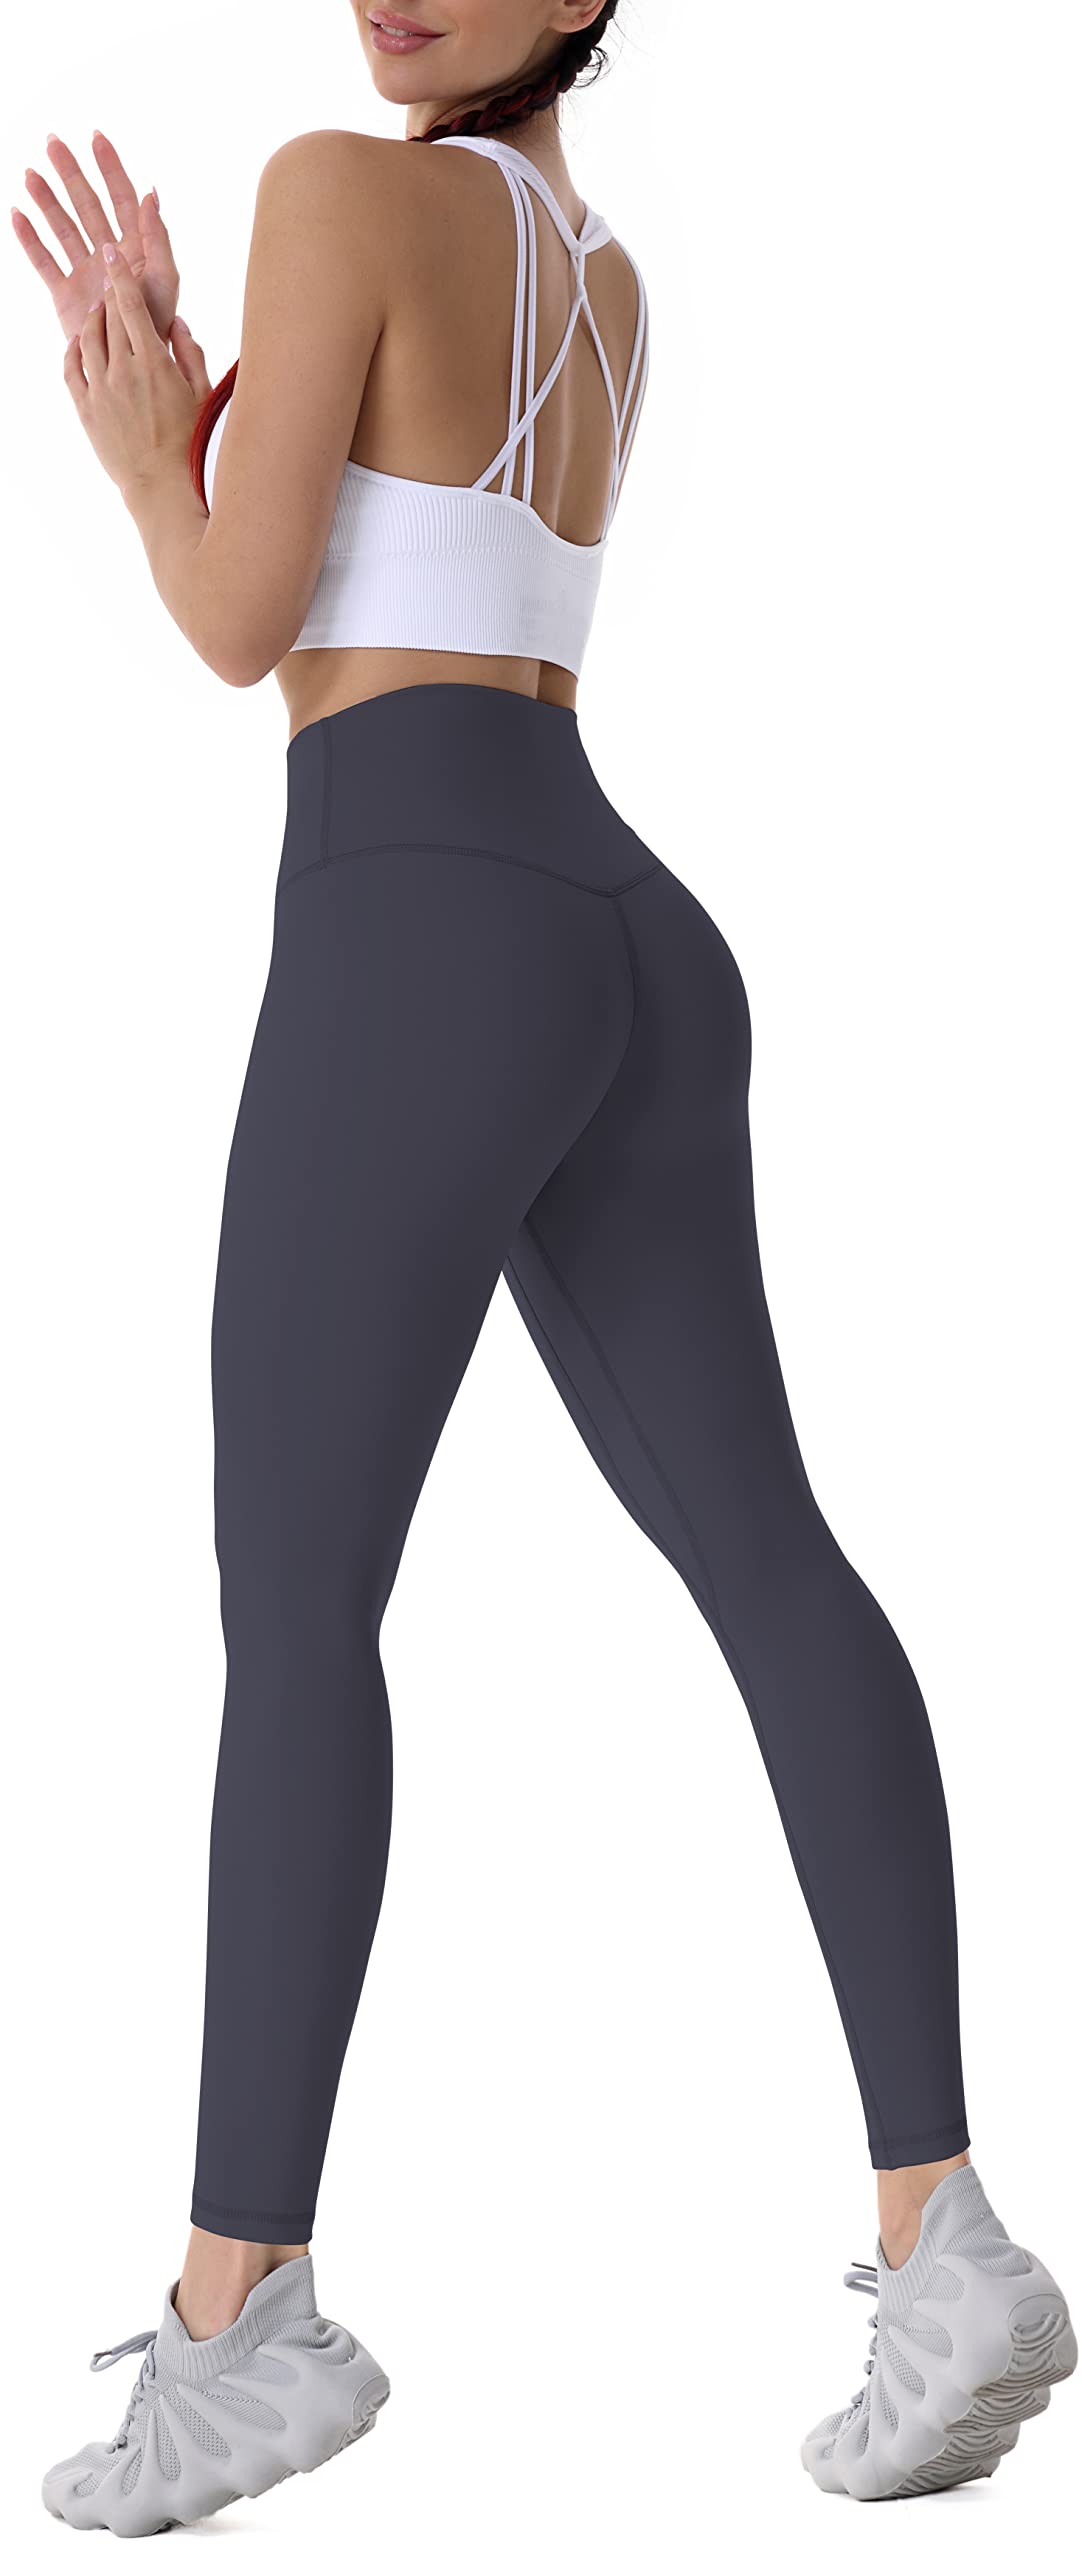 .com .com: Sunzel Workout Leggings for Women, Squat